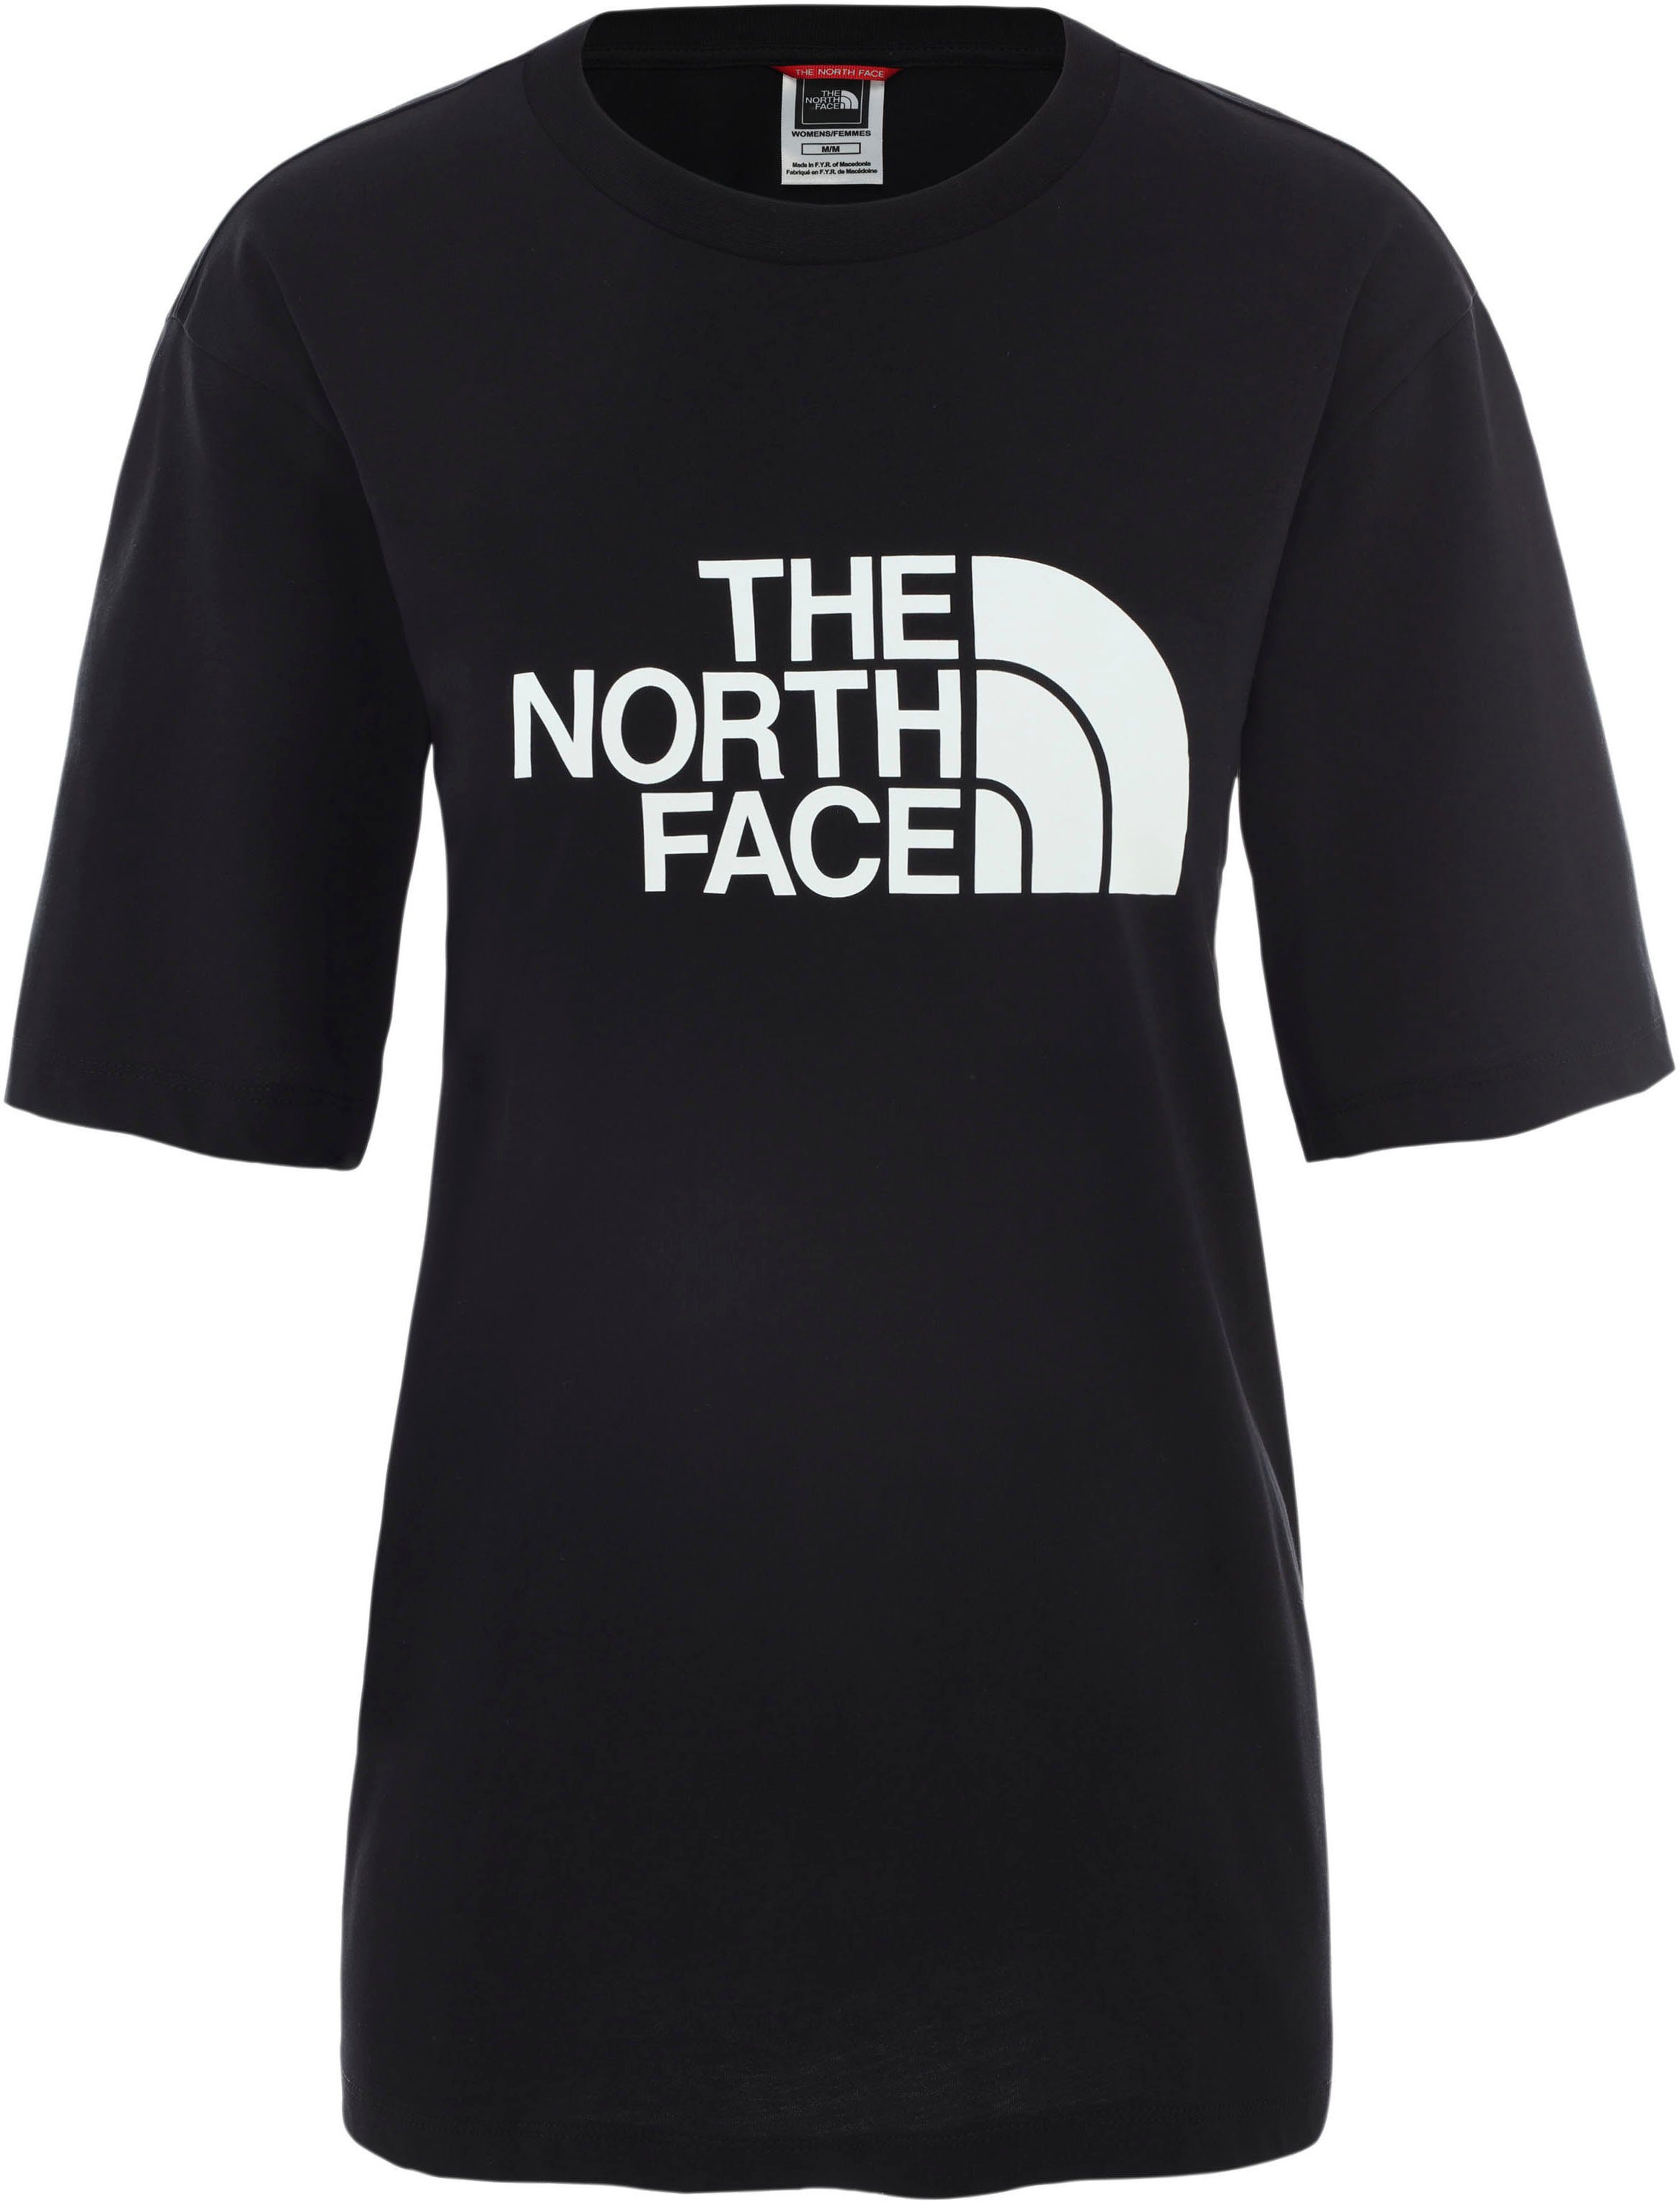 The North Face der Brust W RELAXED EASY TEE black Logodruck auf mit T-Shirt